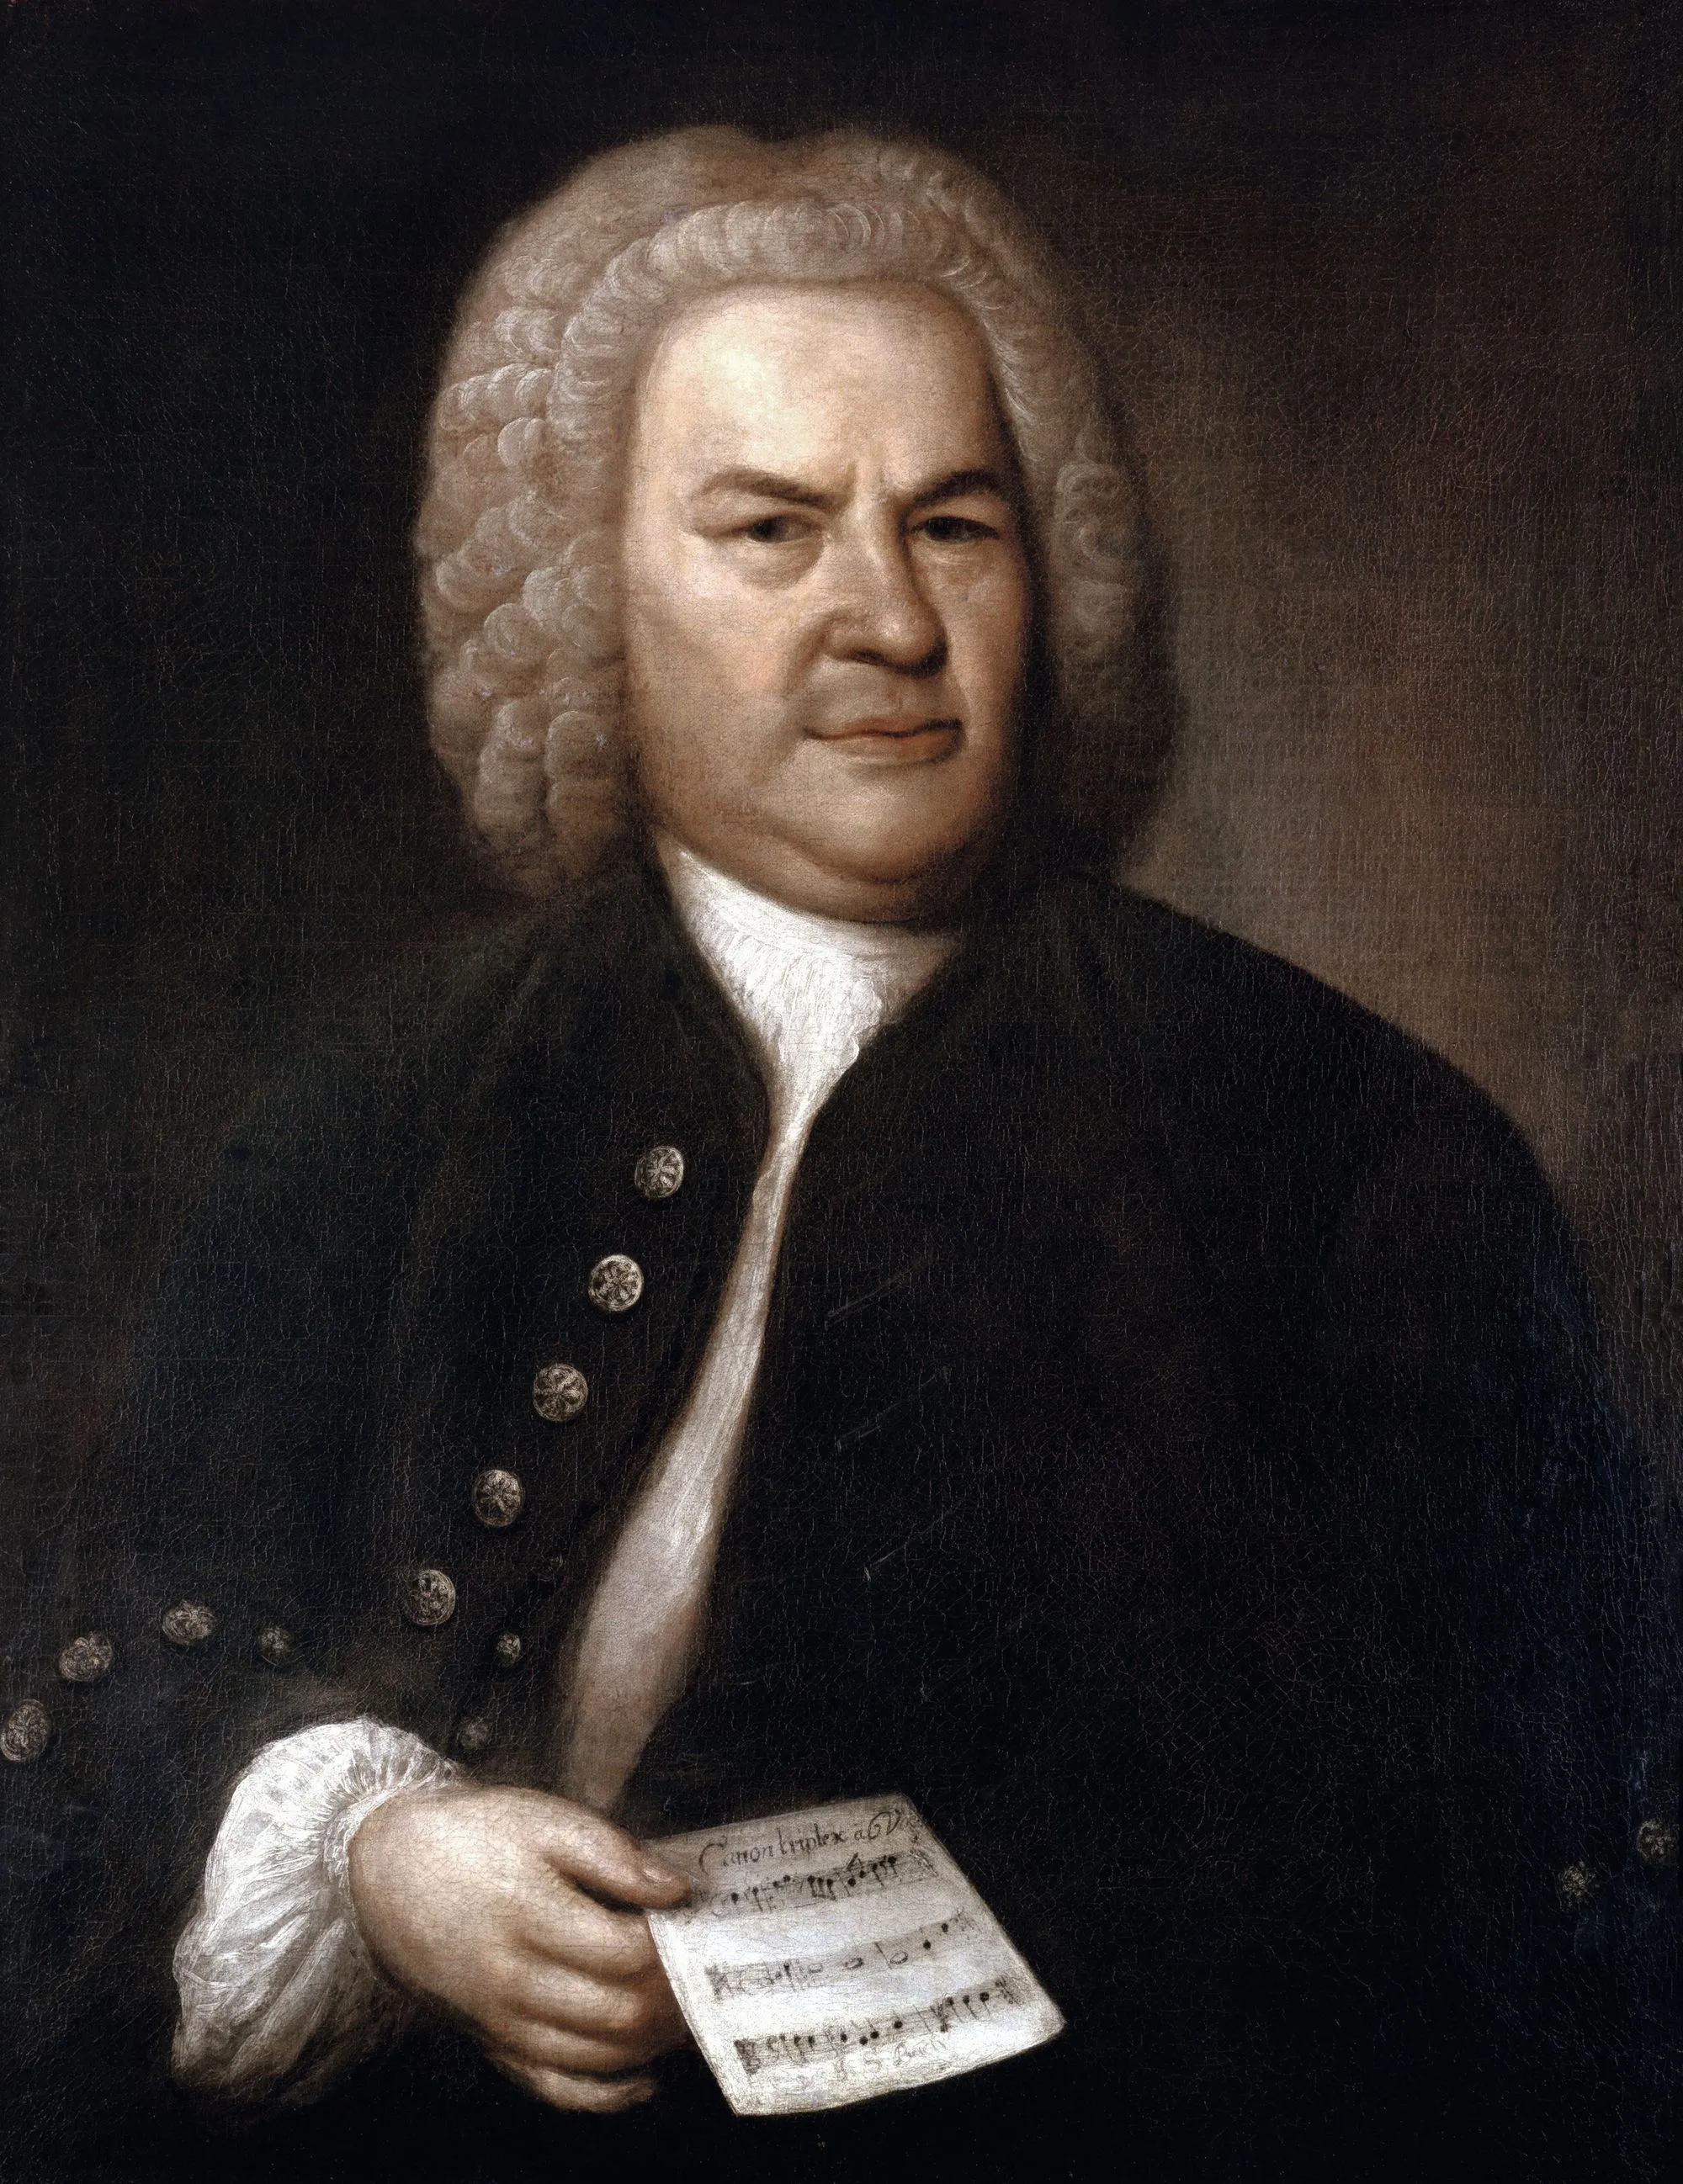 Jean-Sébastien Bach (1685-1750)